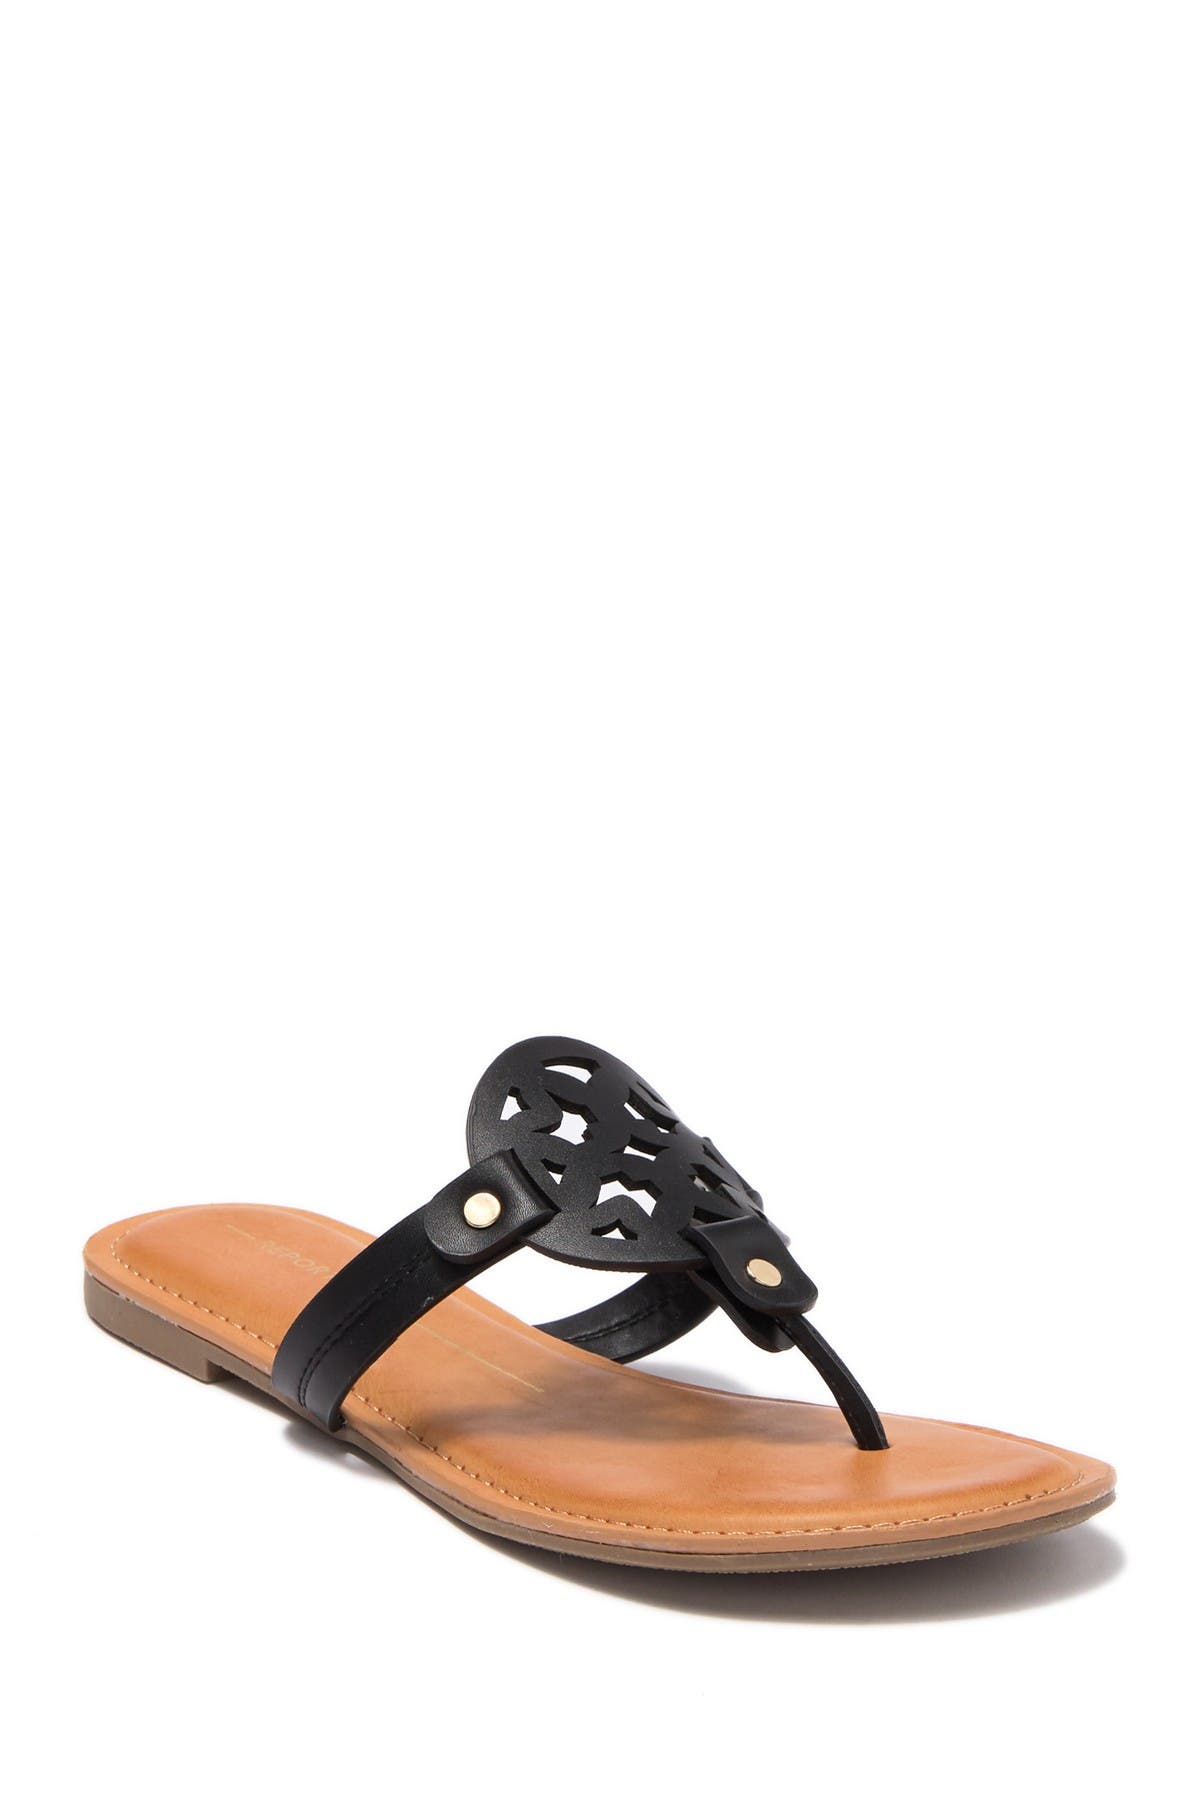 report genie sandal tan